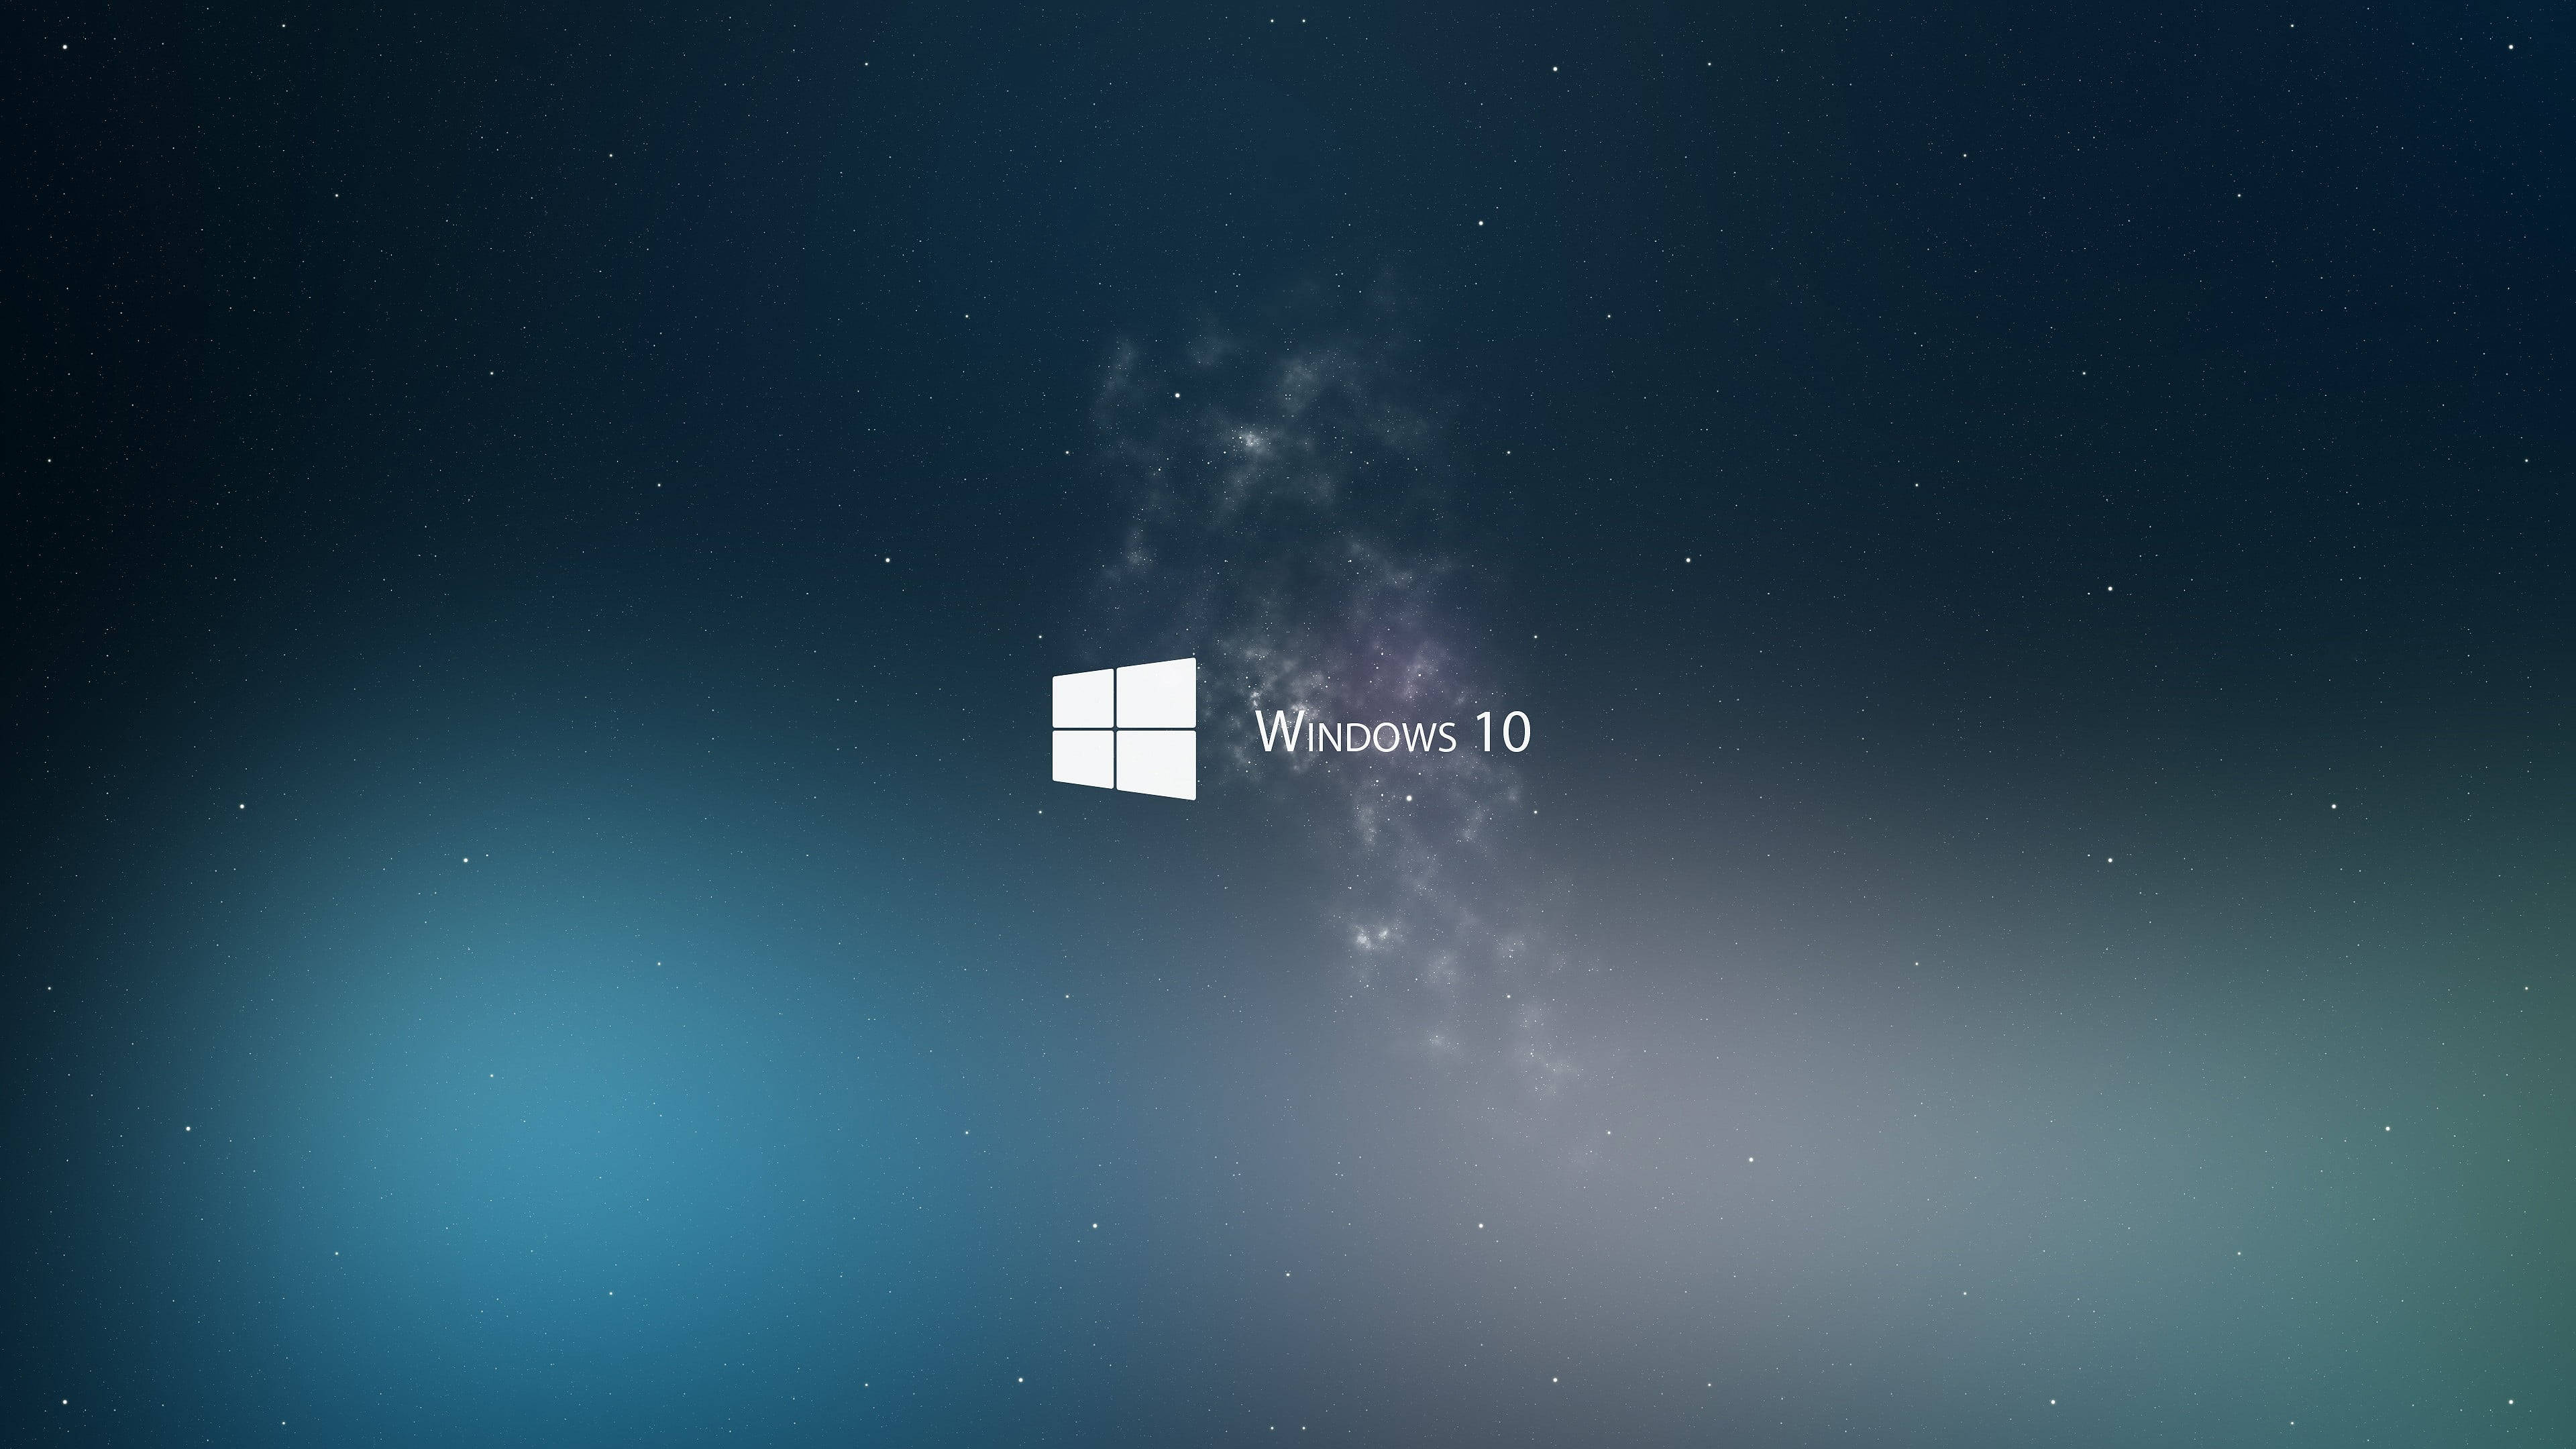 Starry Windows Professional Desktop Wallpaper